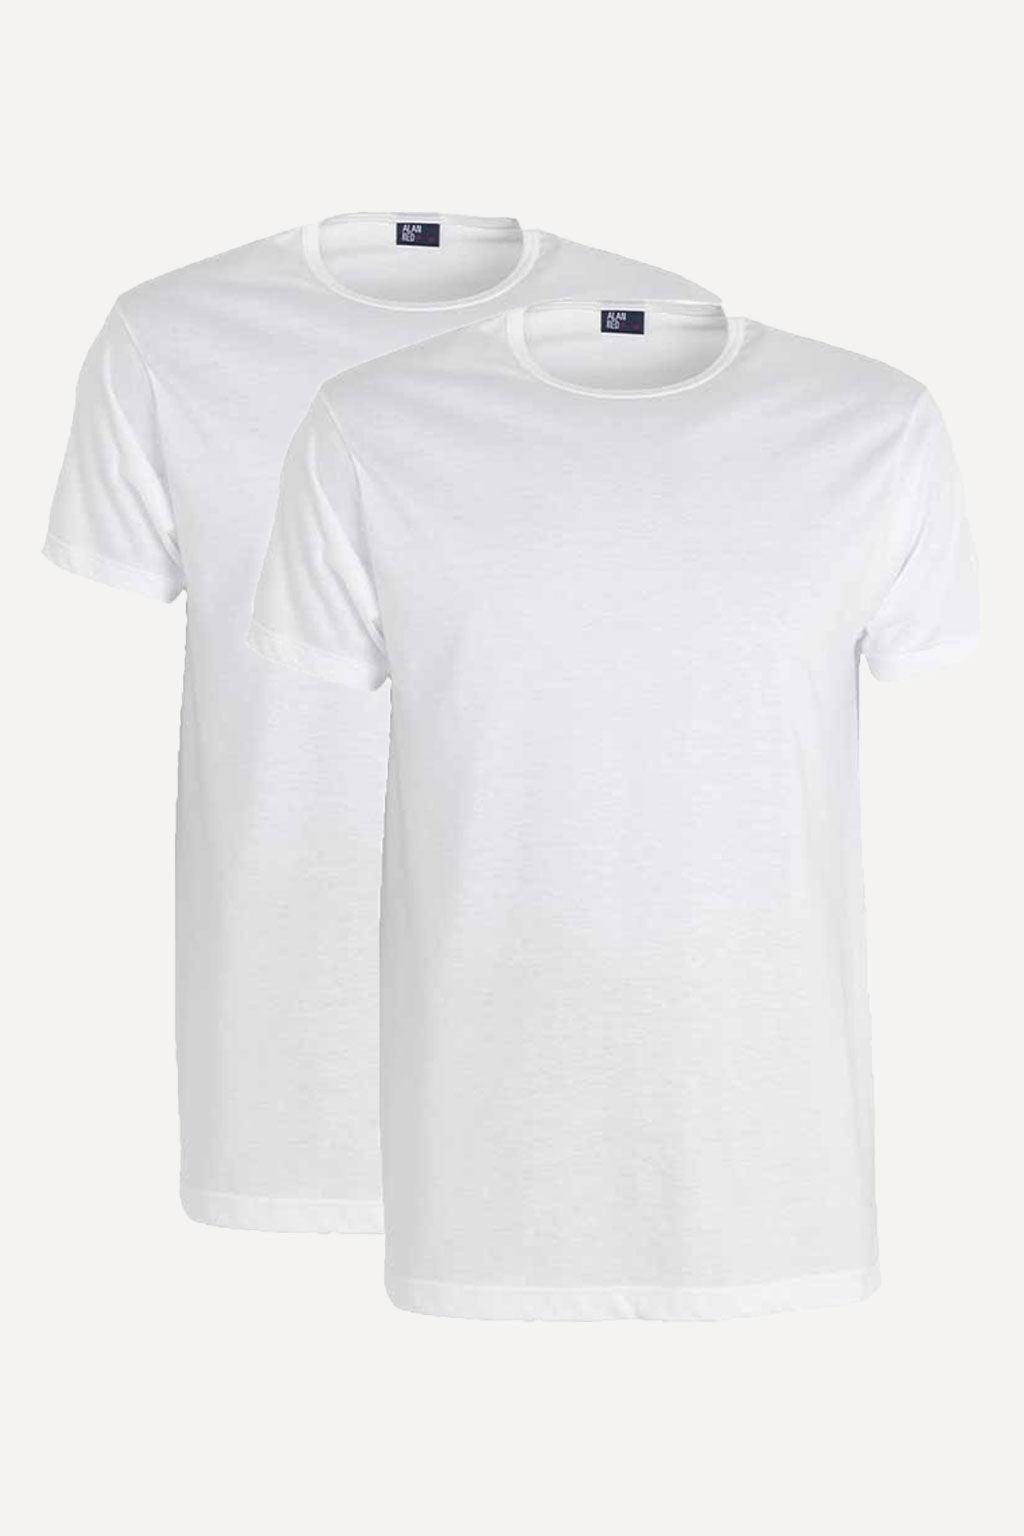 Alan Red t-shirt - Big Boss | the menswear concept